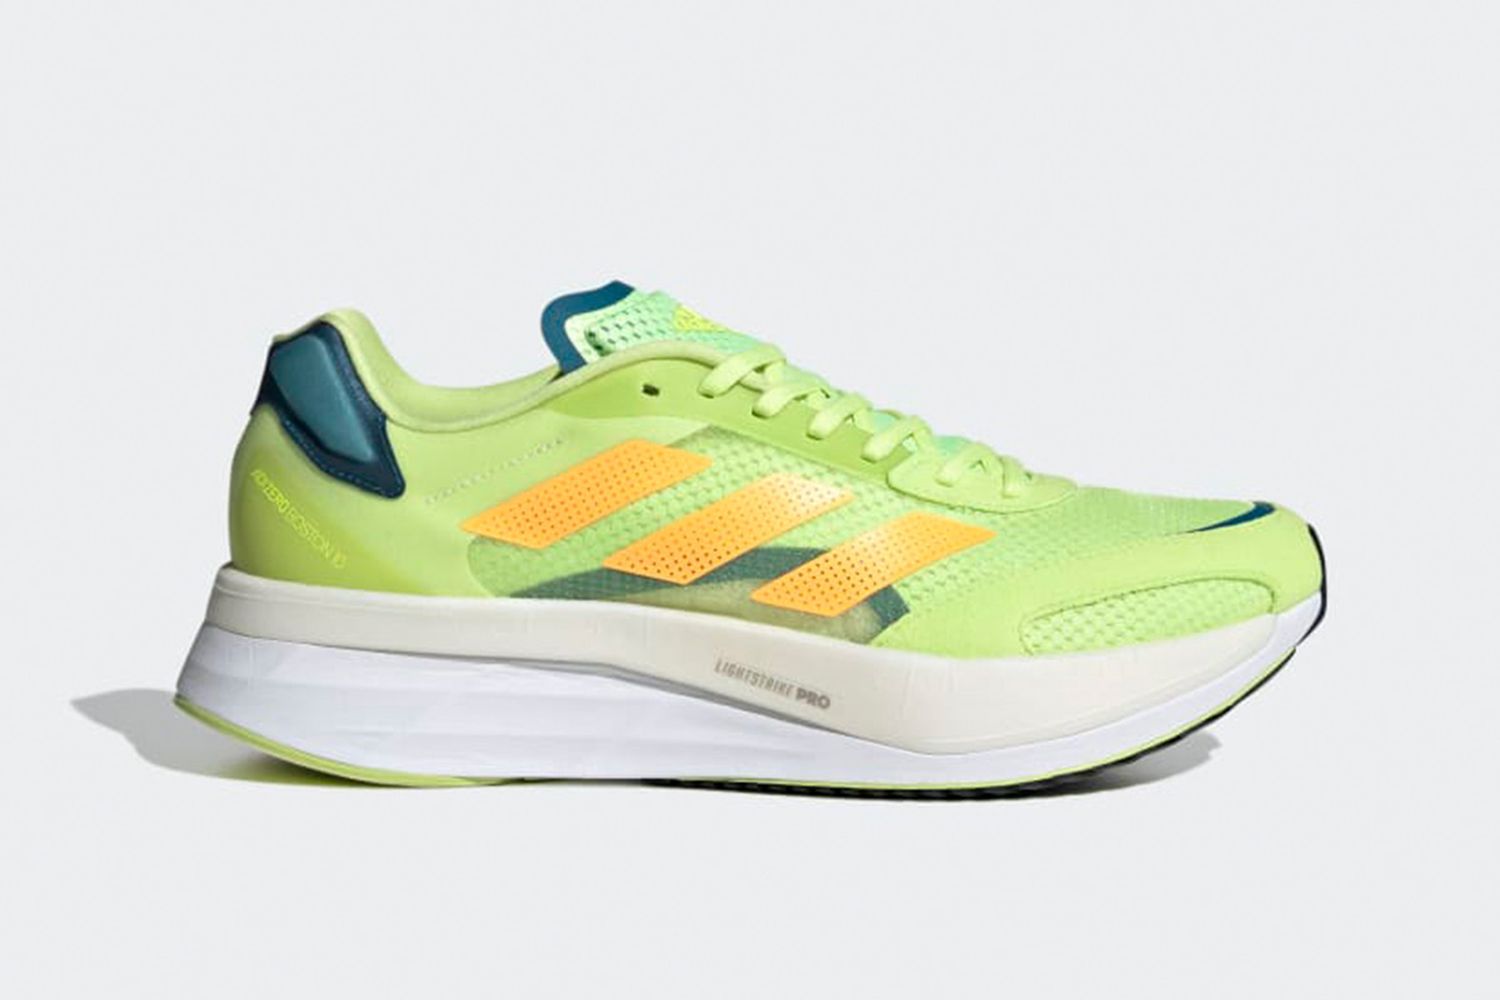 Adidas running shoes